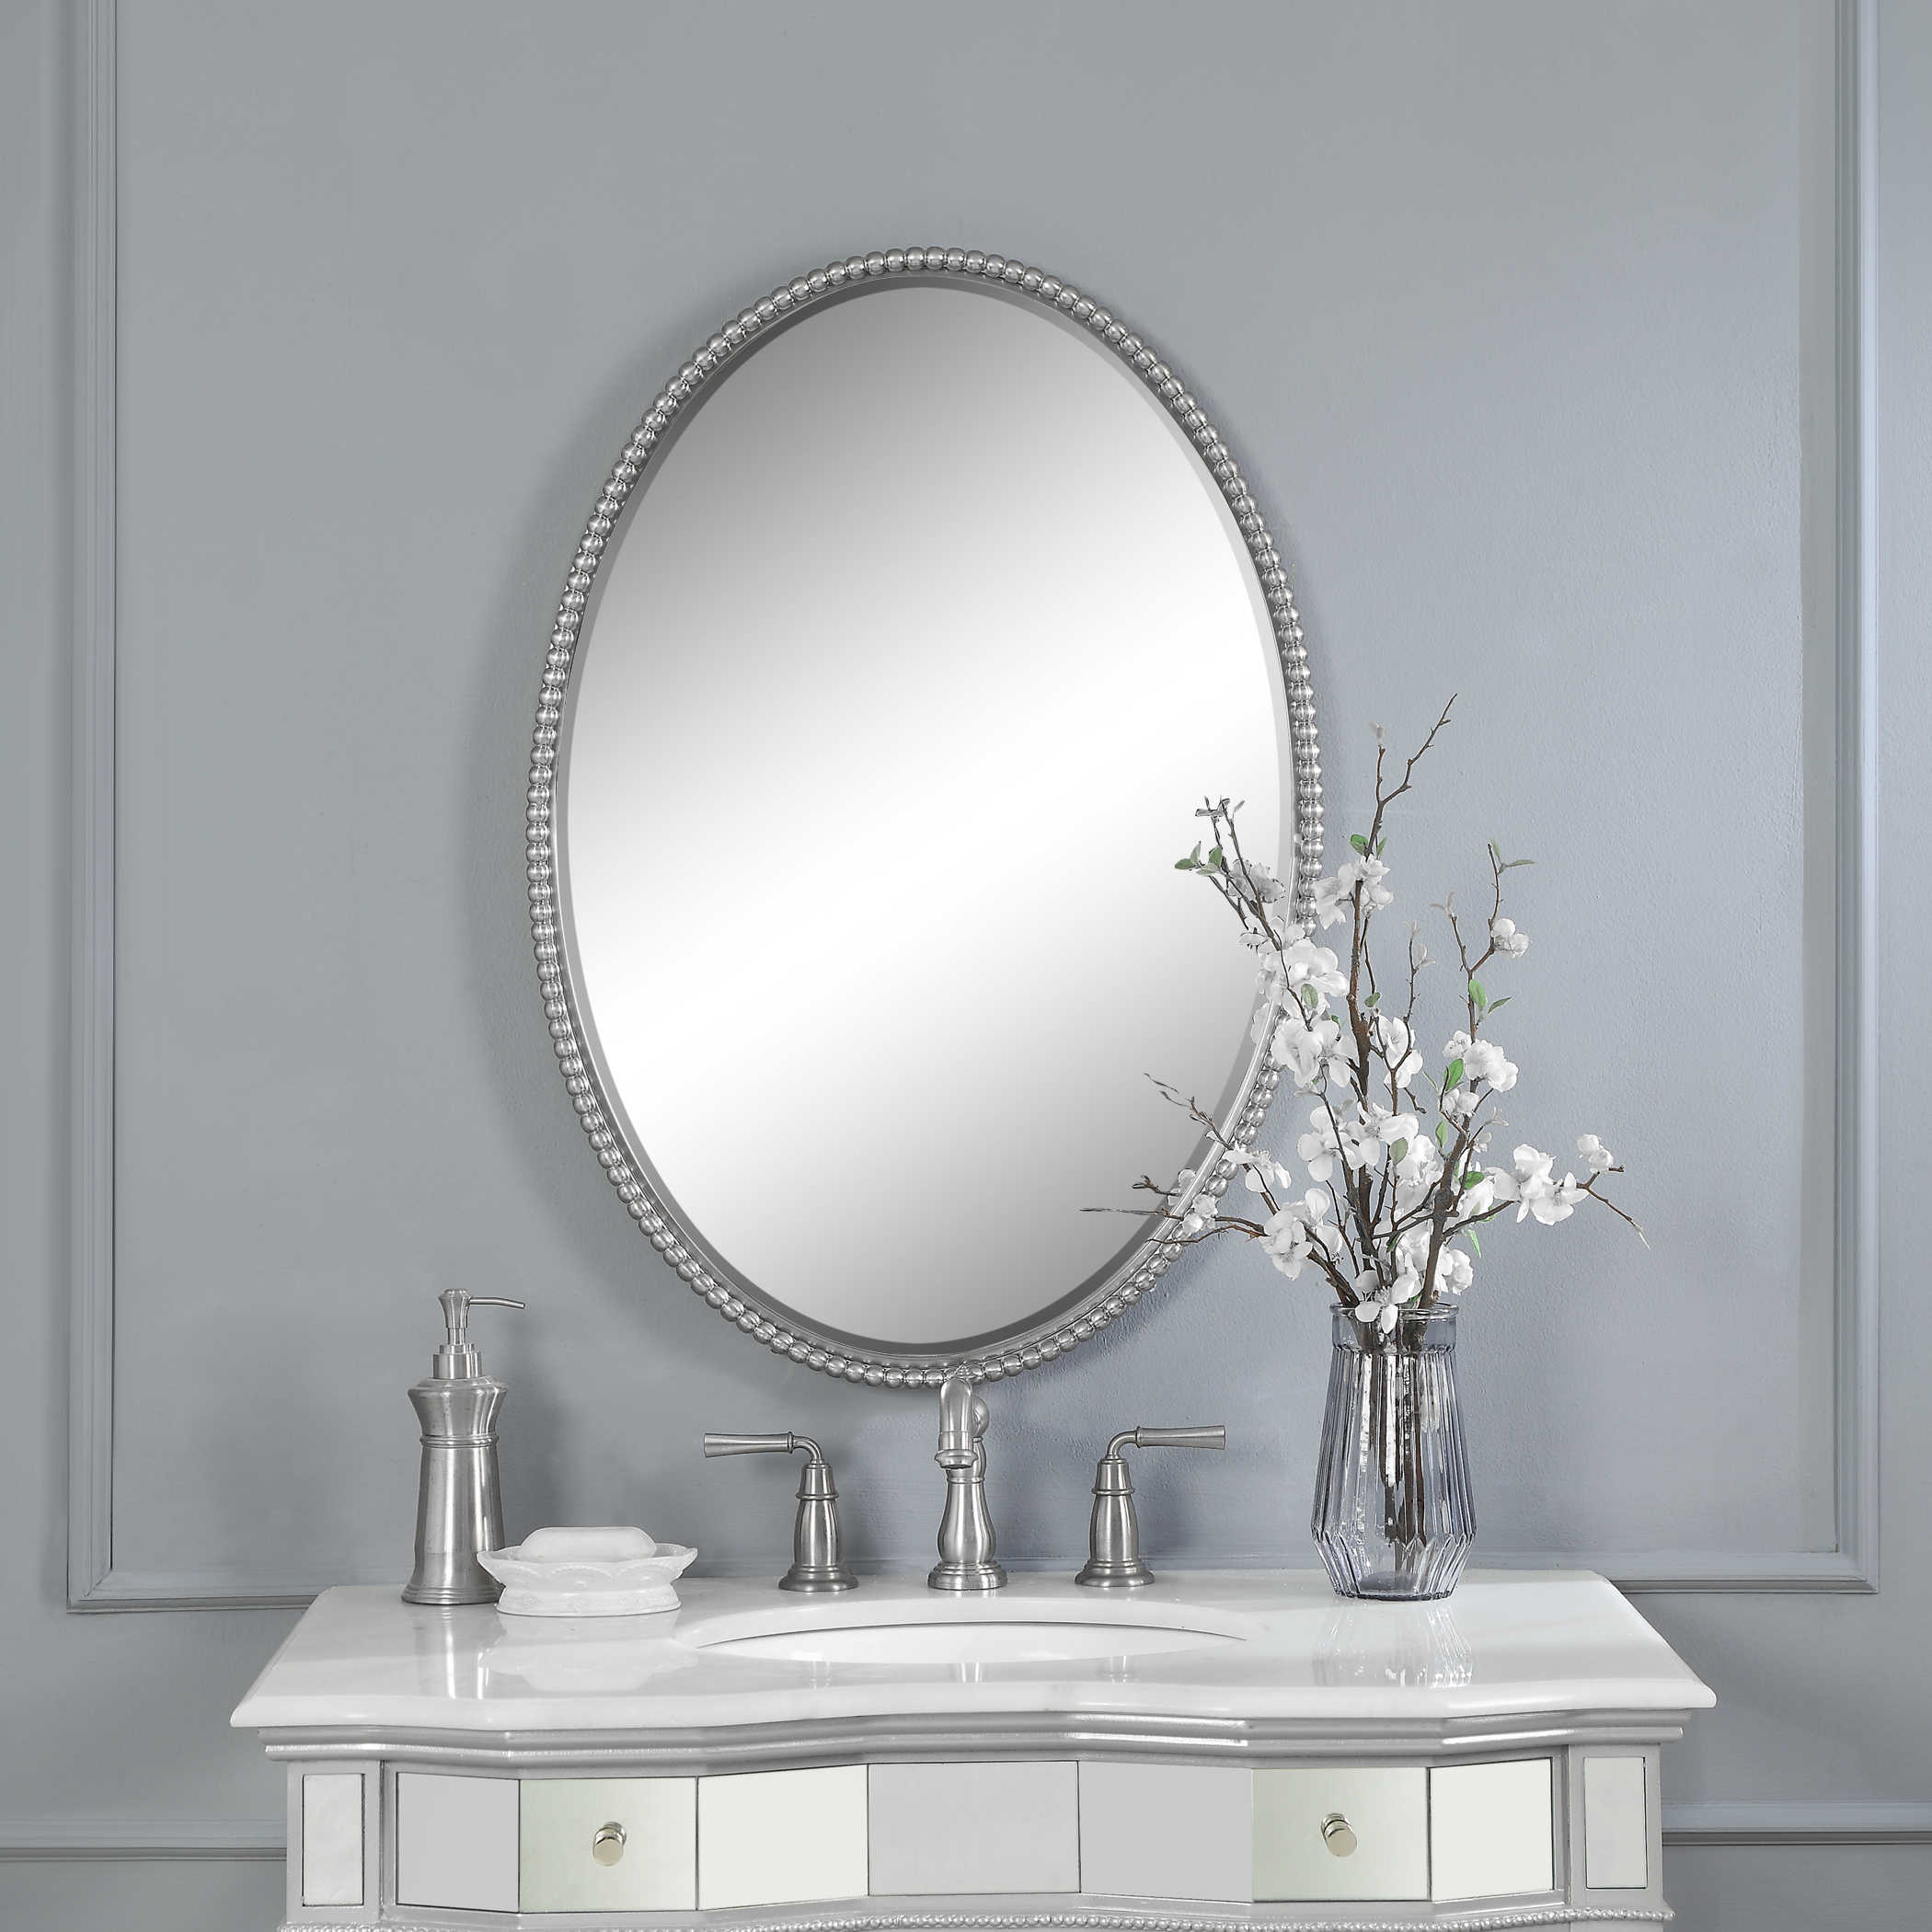 Uttermost 01102 B Brushed Nickel, Polished Nickel Oval Bathroom Mirror